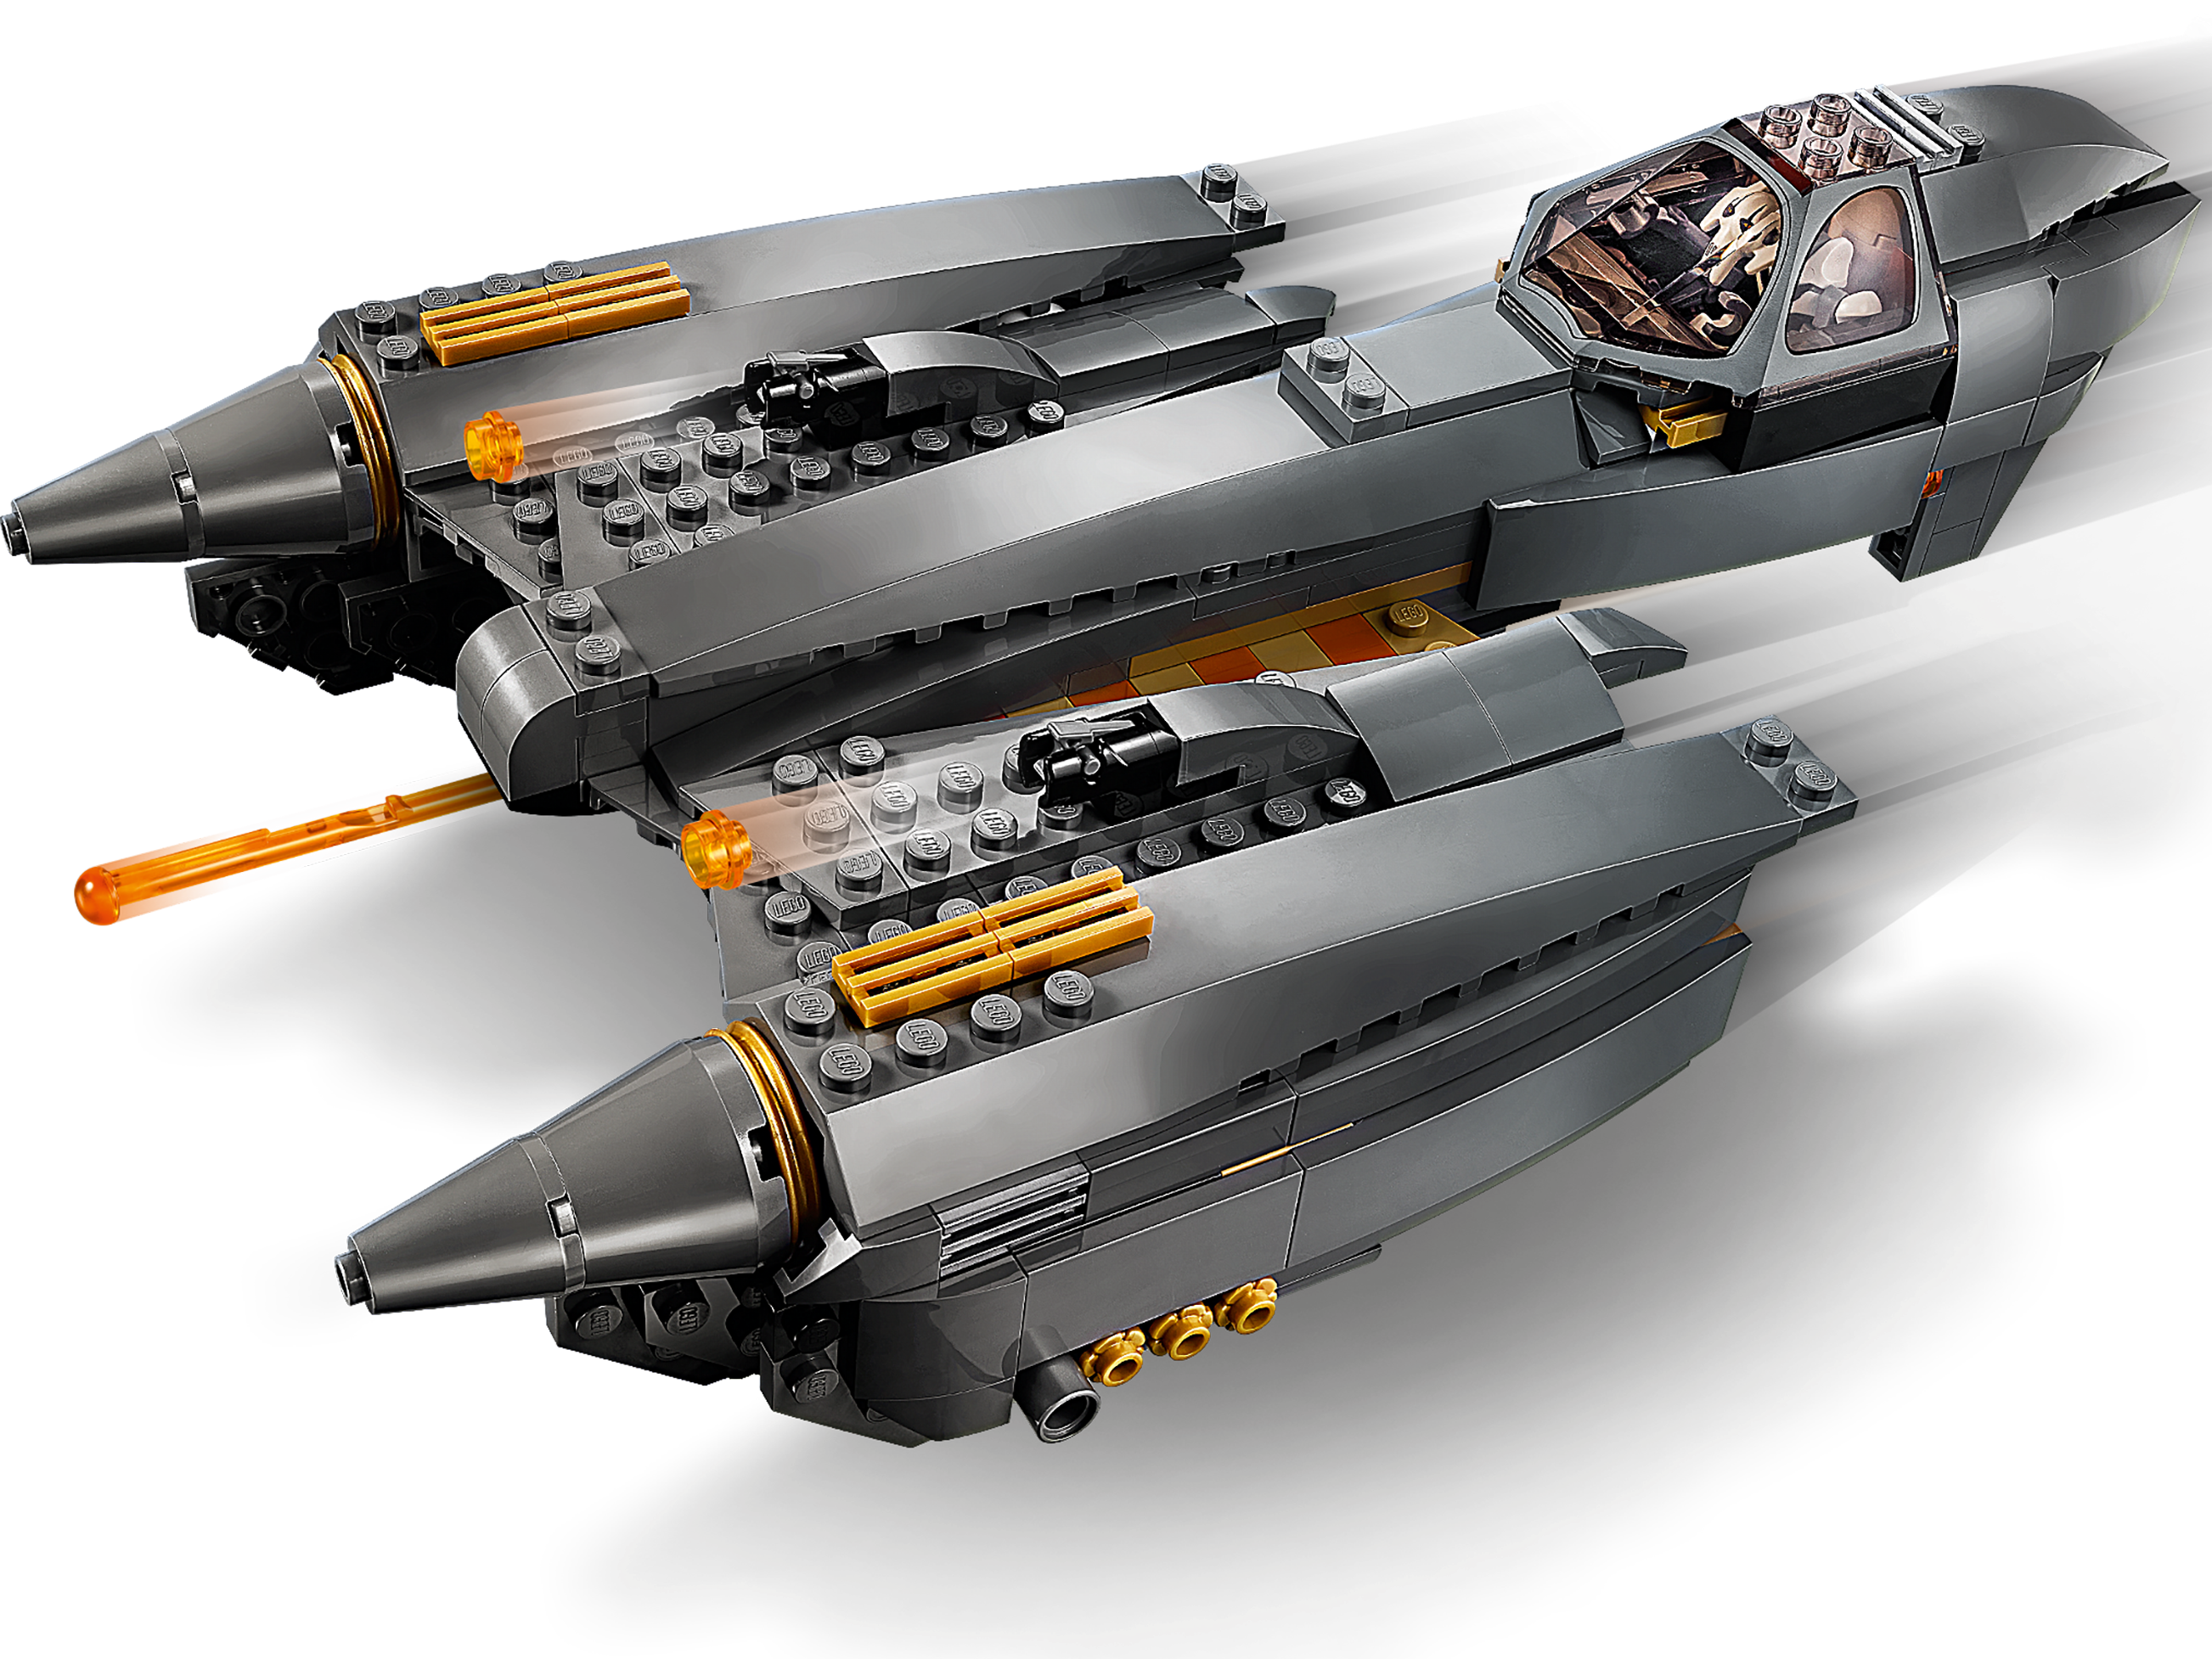 Lego Star Wars Airborne Clone Trooper SW1100 Grievous's Starfighter 75286 NEW